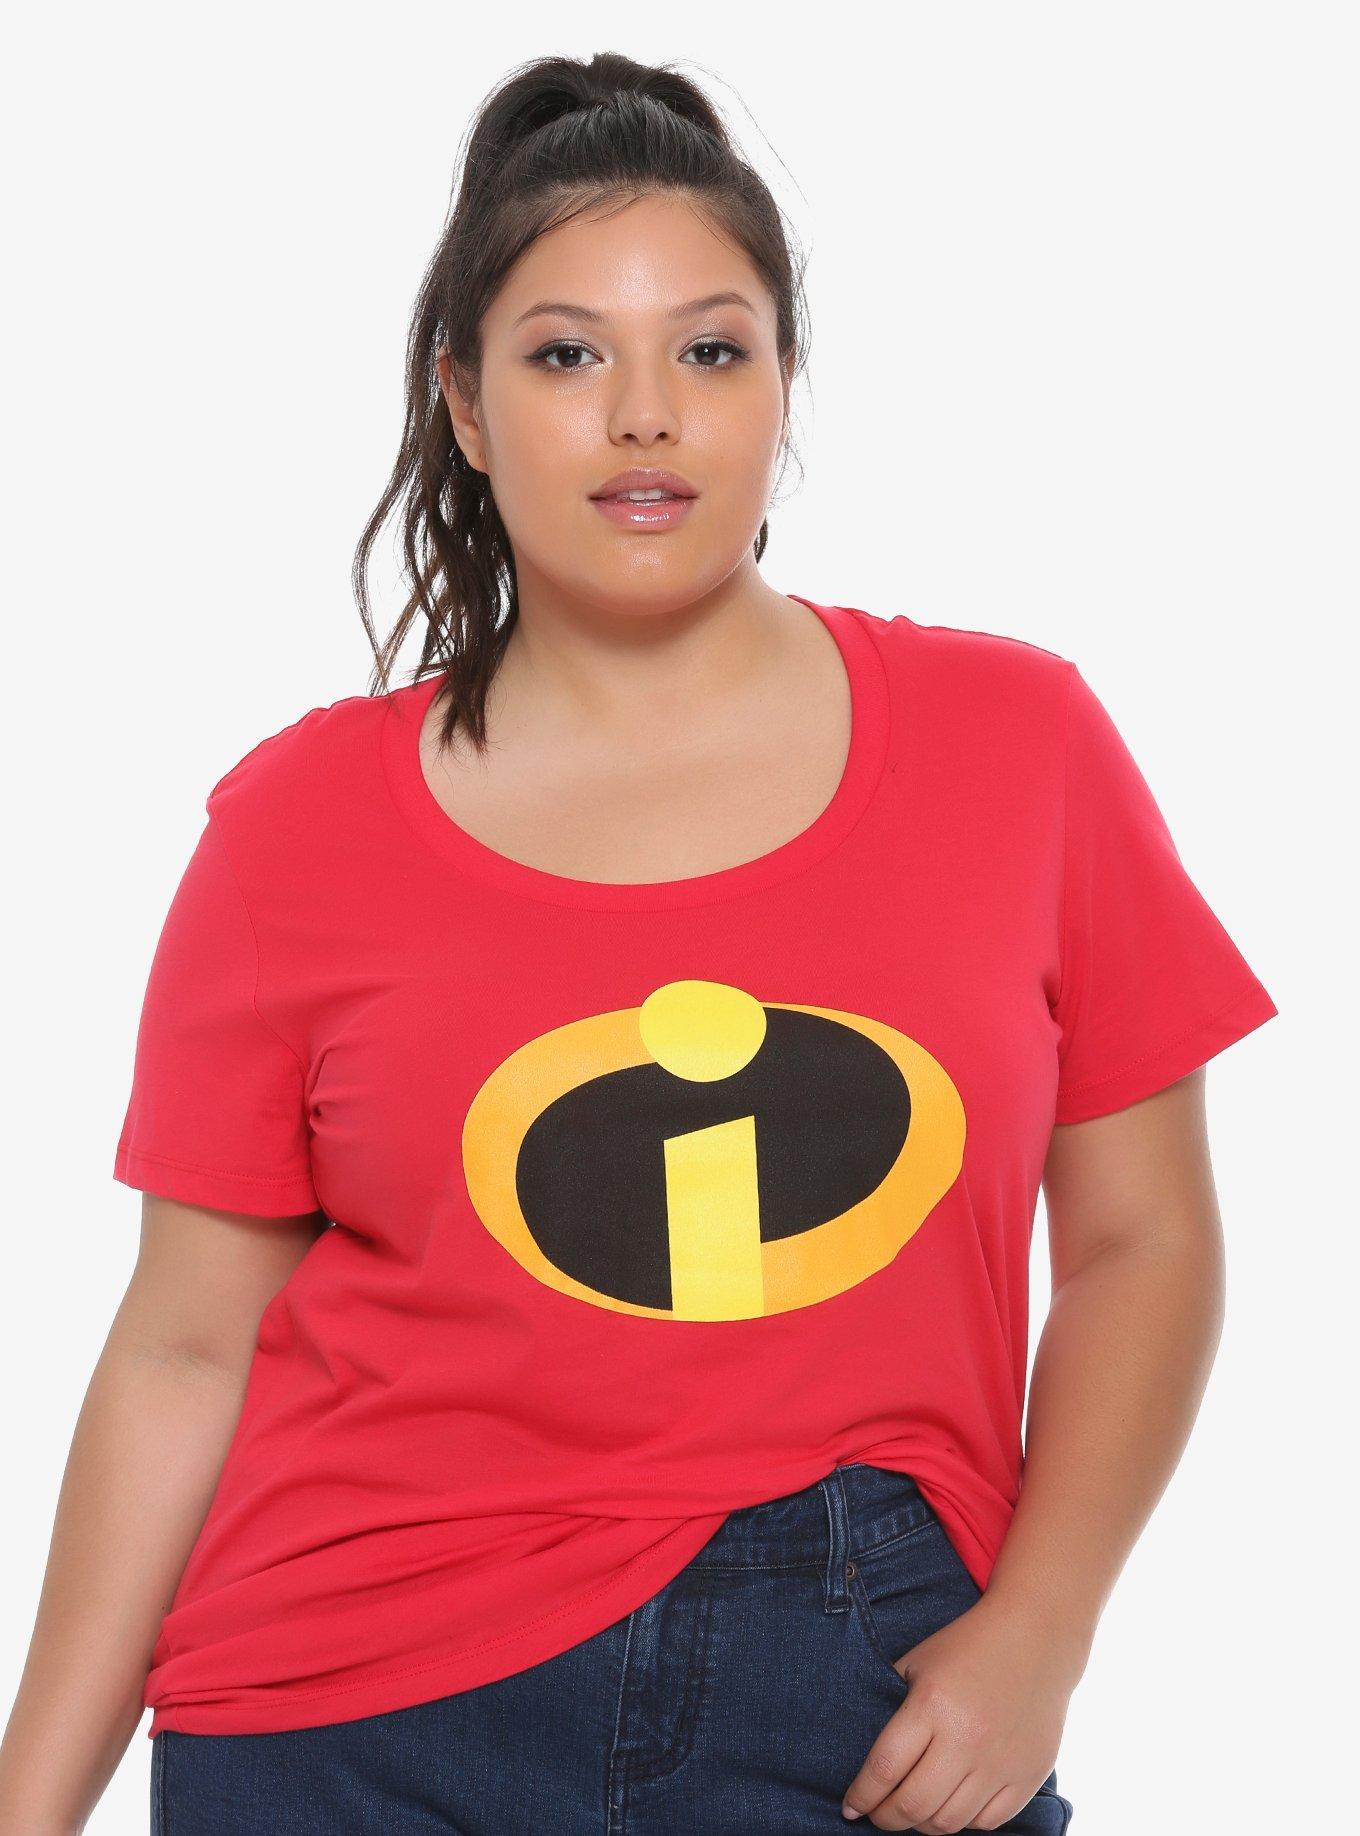 Disney Pixar Incredibles Girls Cosplay T-Shirt Plus Size, RED, hi-res